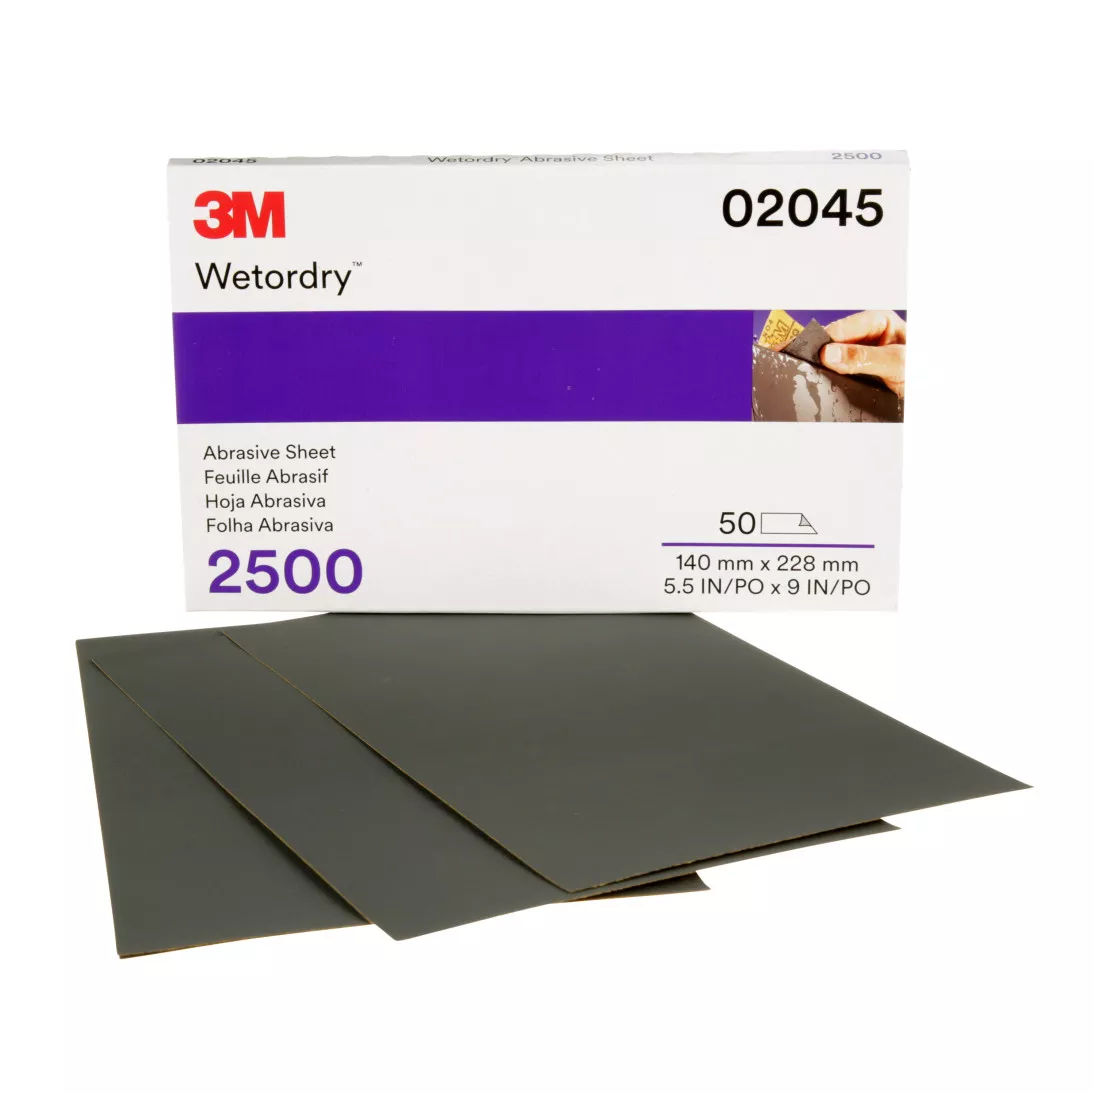 3M™ Wetordry™ Abrasive Sheet 401Q, 02045, 2500, 5 1/2 x 9 in, 50 sheets
per carton, 5 cartons per case